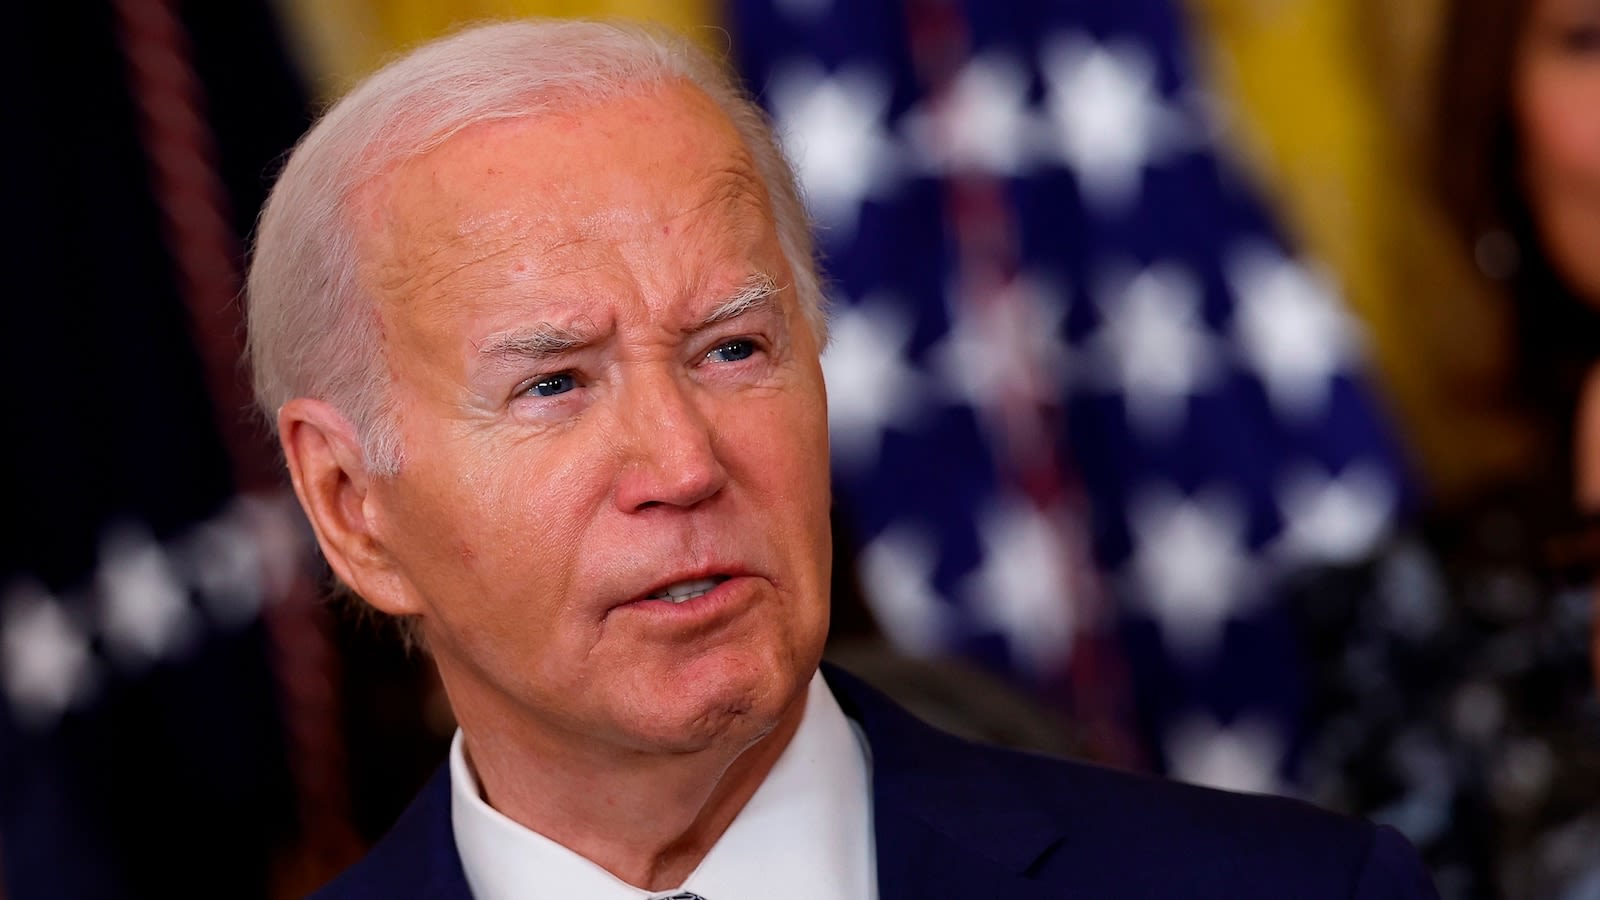 President Biden pardons veterans convicted under regulation used to keep LGBTQ members from serving